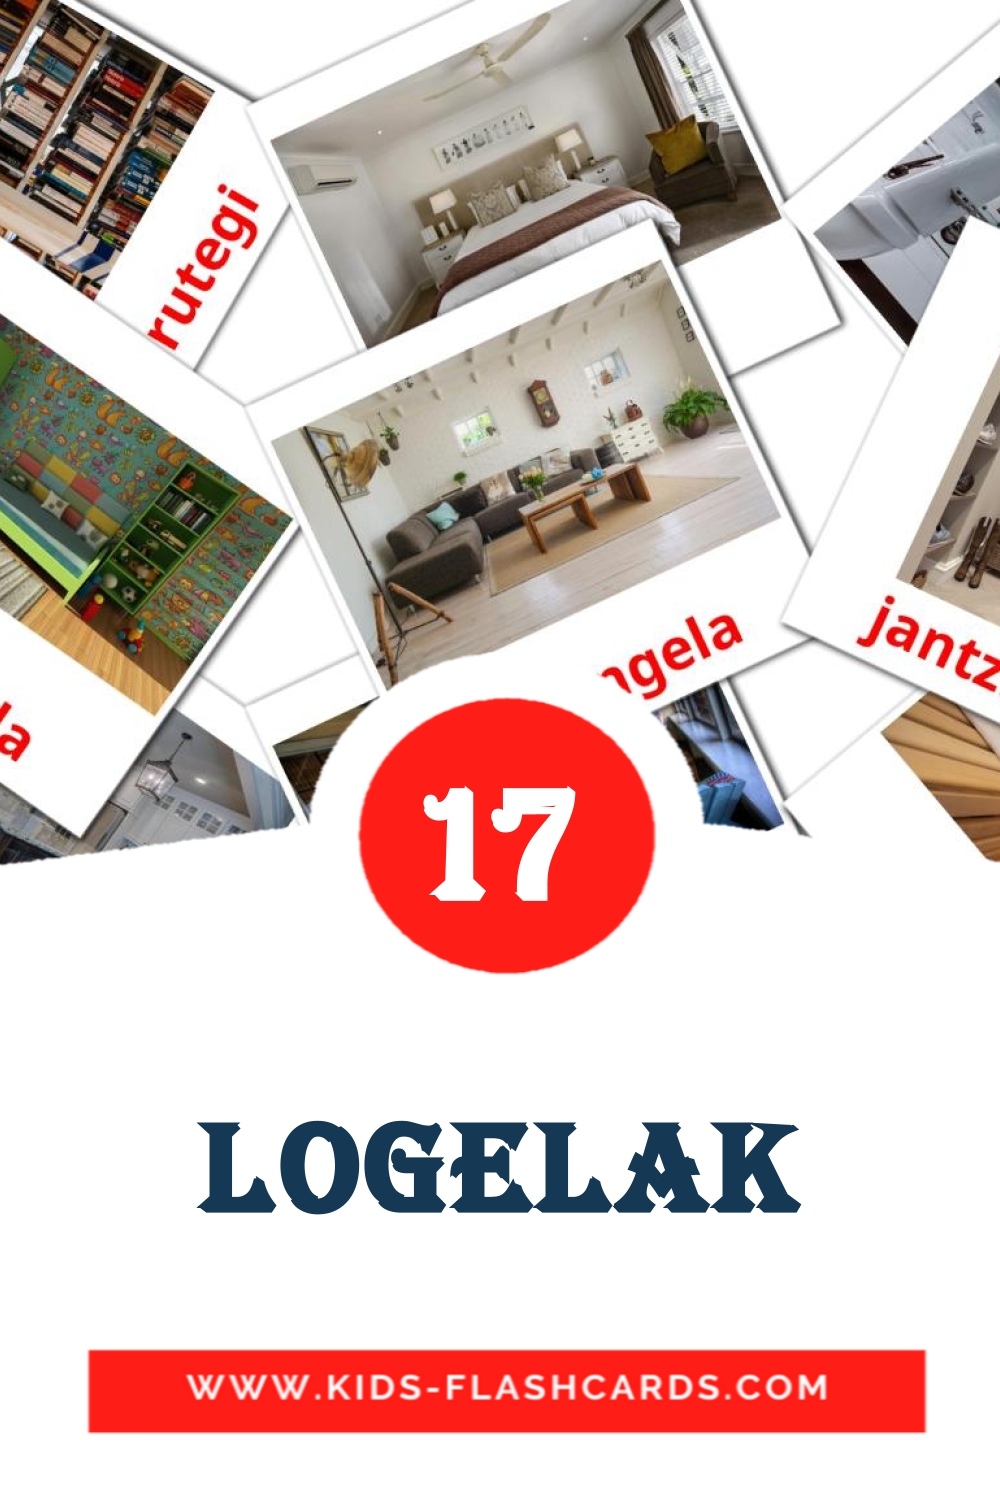 17 logelak Picture Cards for Kindergarden in basque